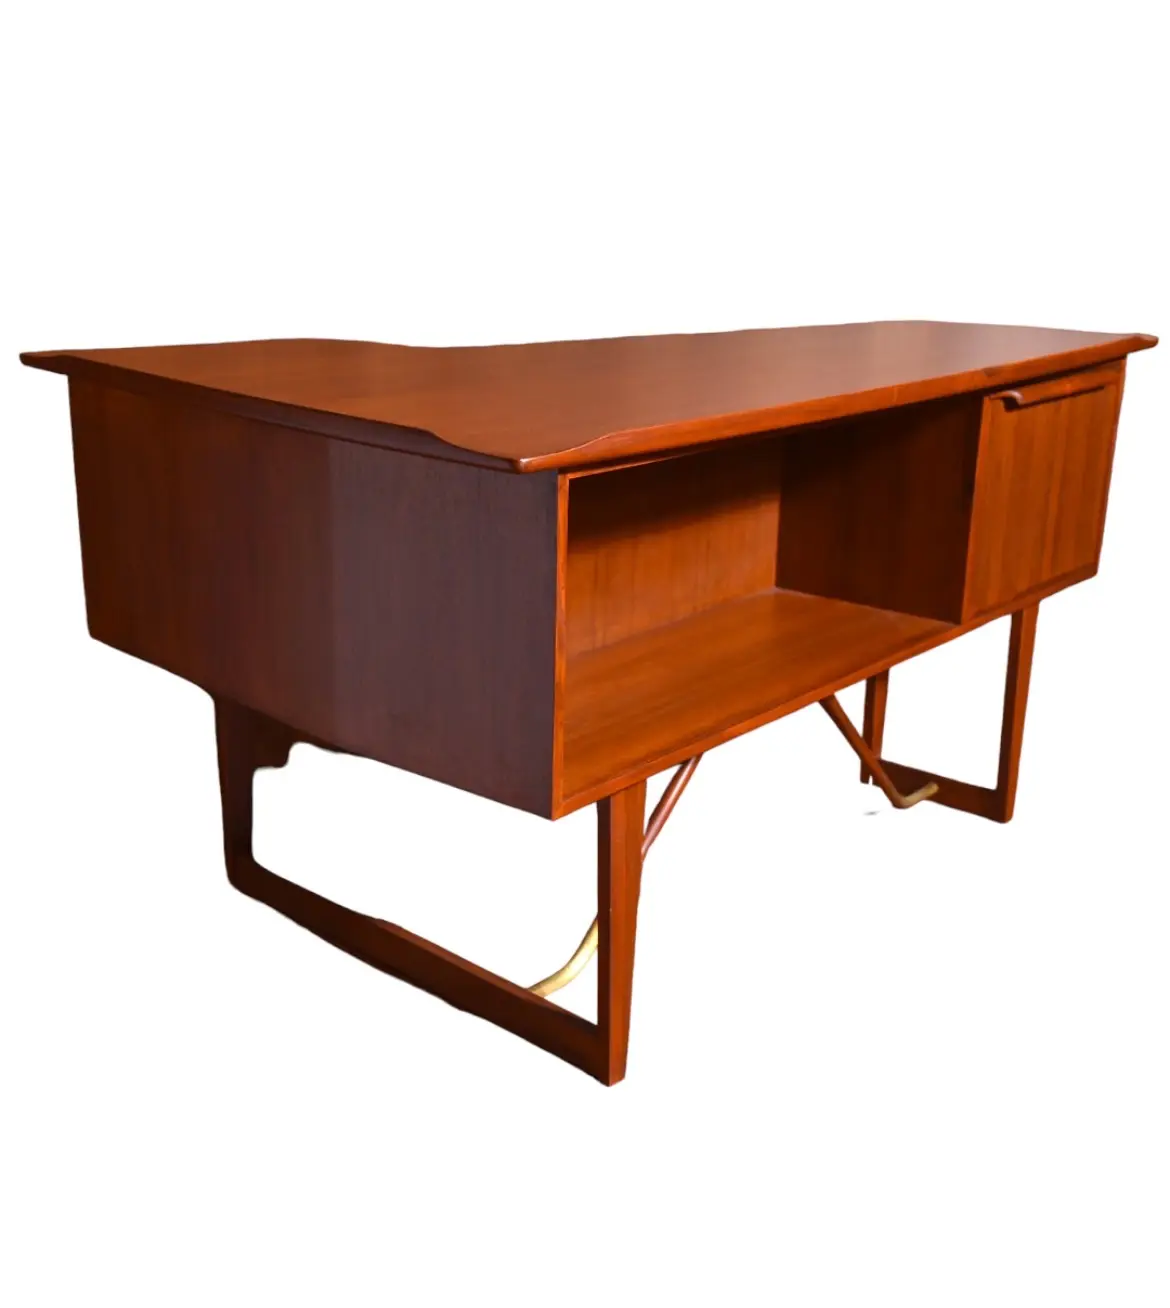 Lujosa mesa de madera en un estilo moderno Tamaño pequeño adecuado para trabajar o como soporte de TV Listo para enviar desde Tailandia